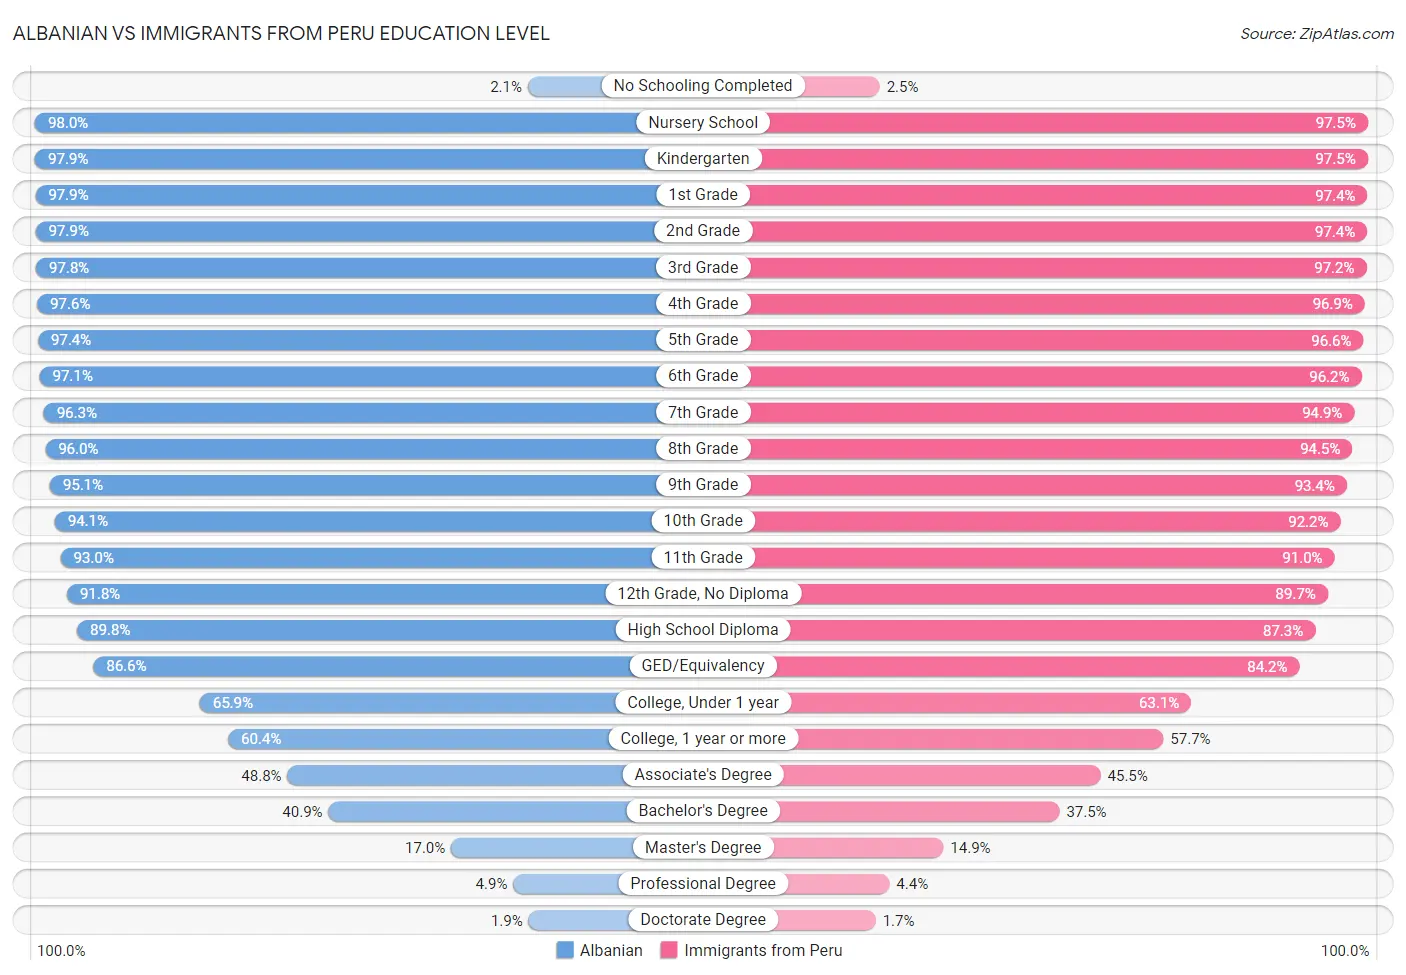 Albanian vs Immigrants from Peru Education Level